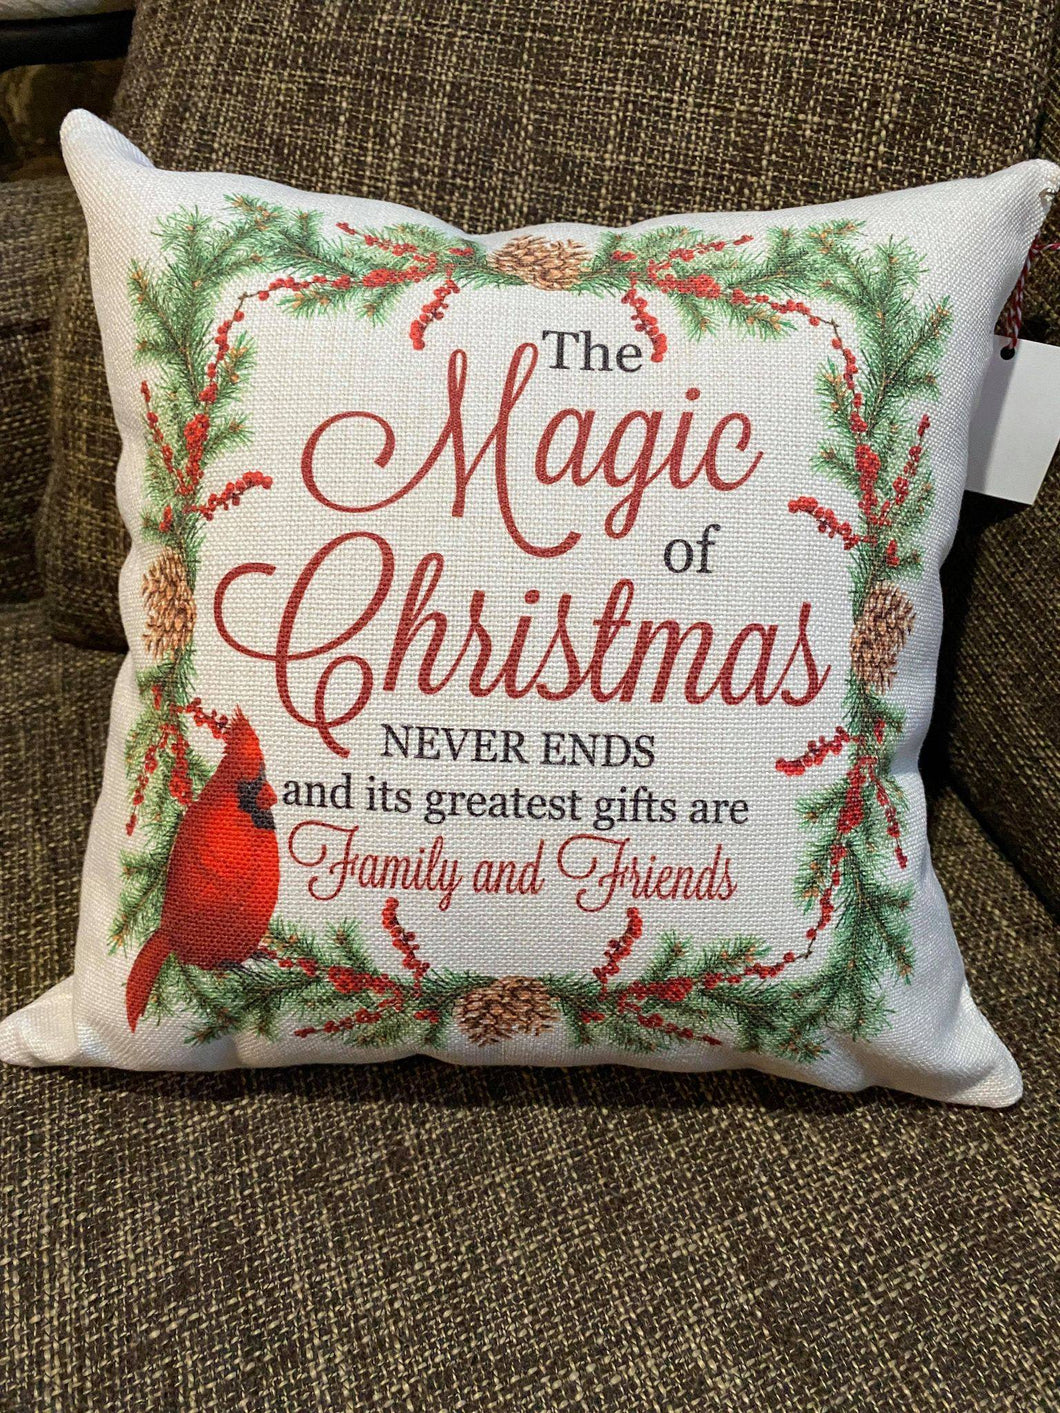 The magic of Christmas